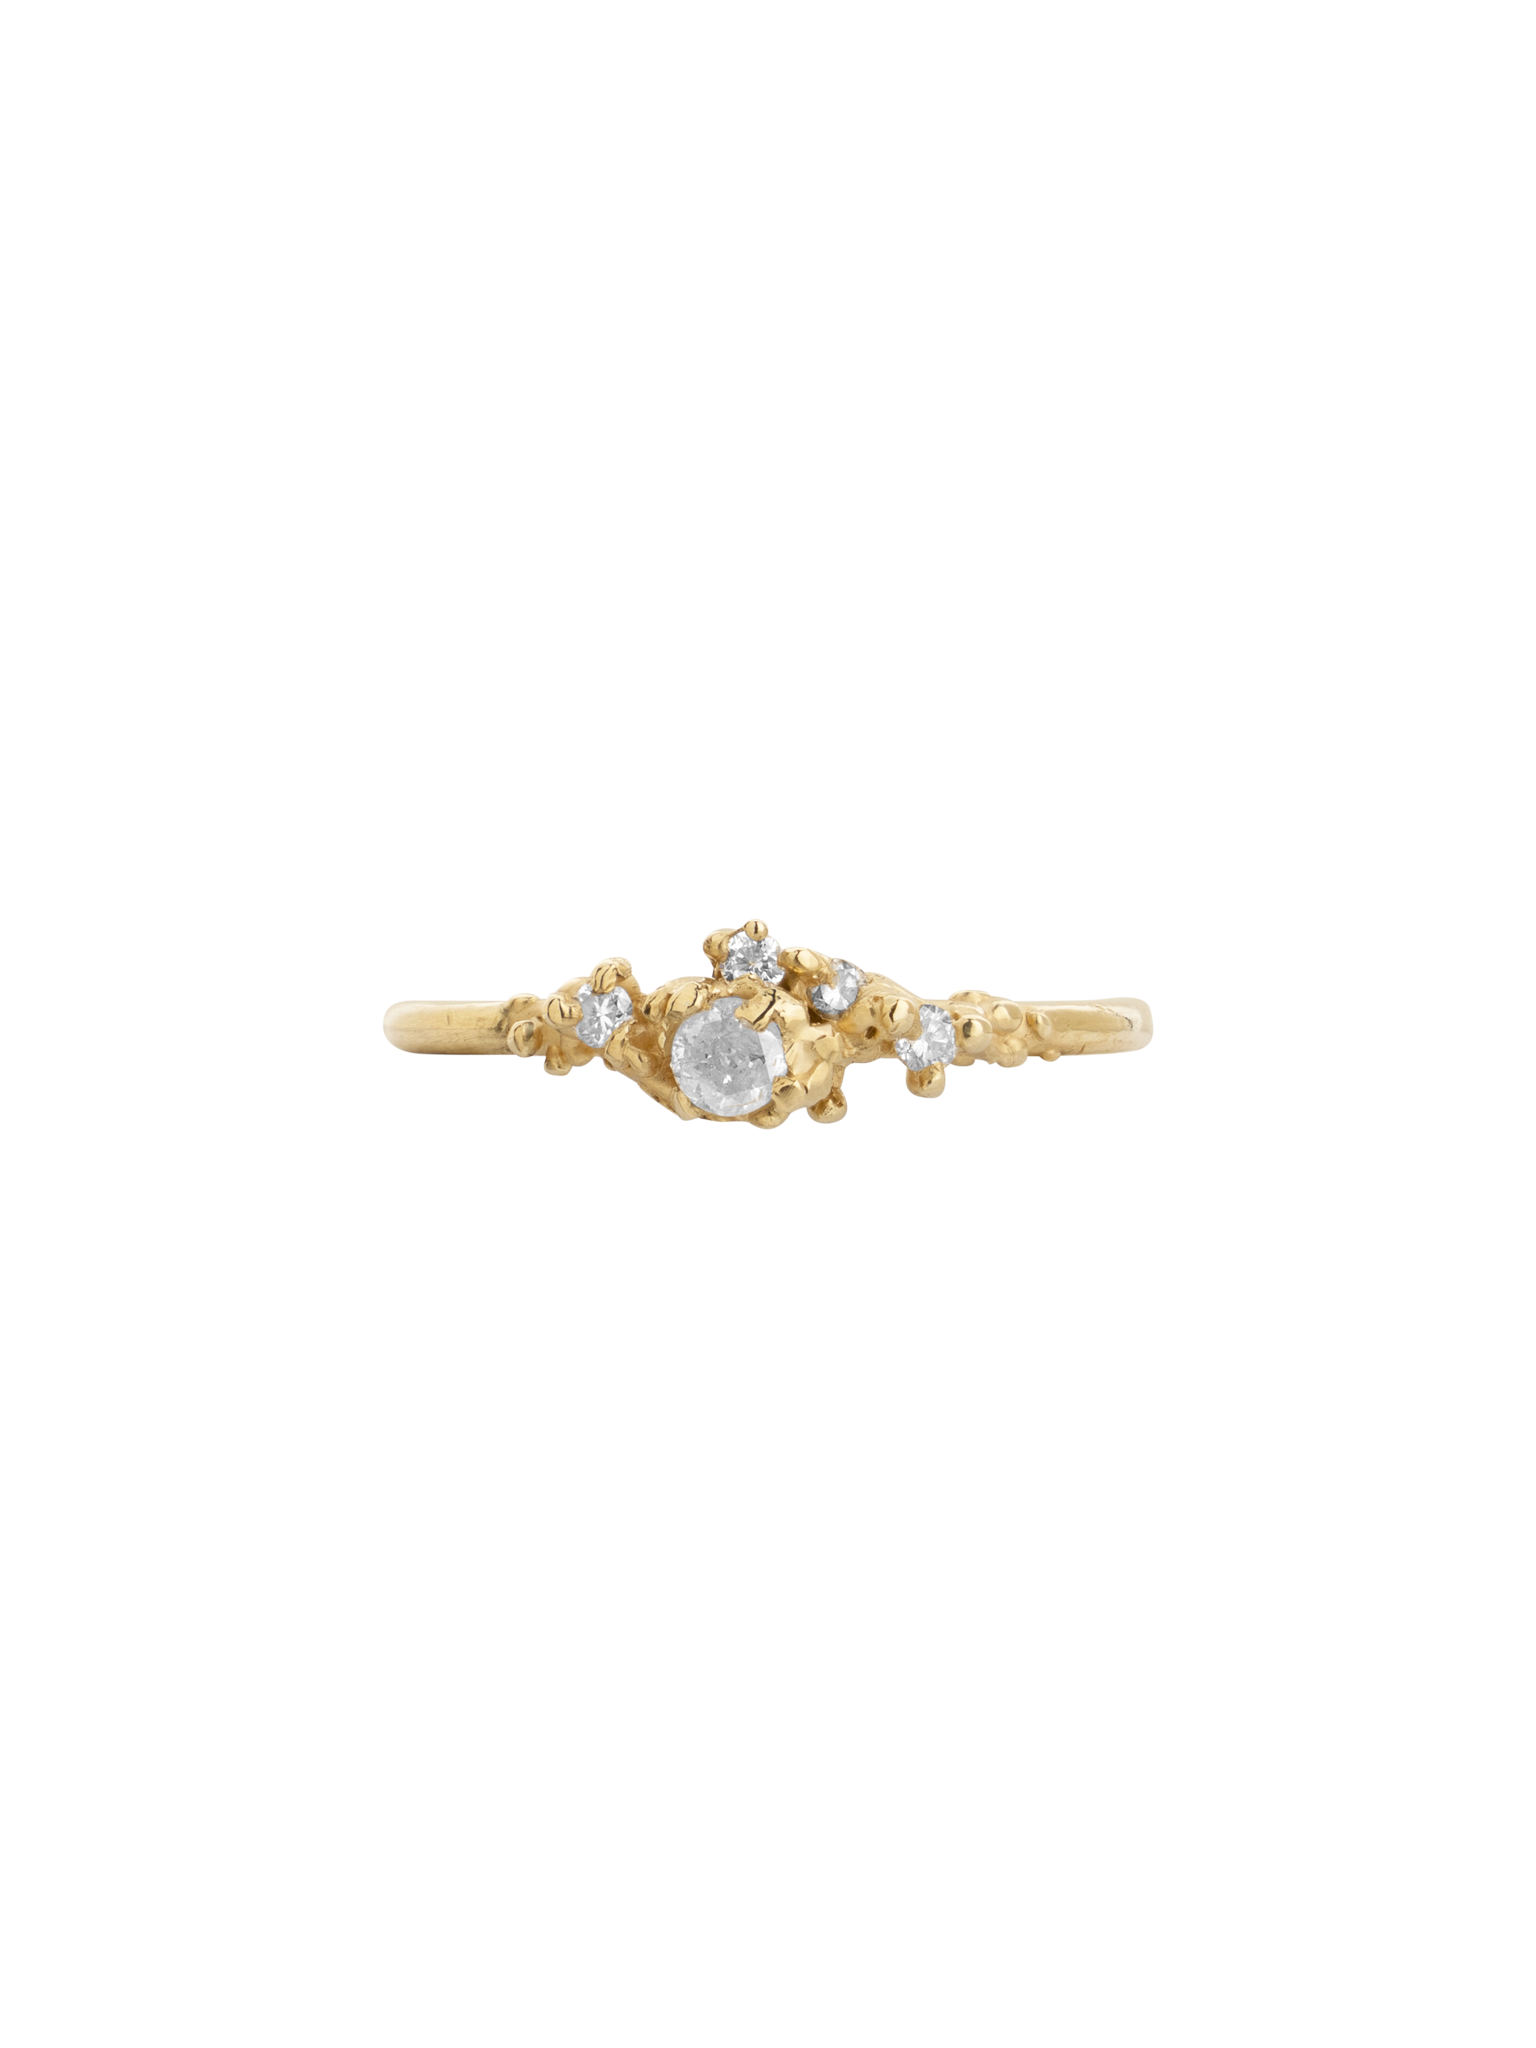 'Constellation' diamond ring